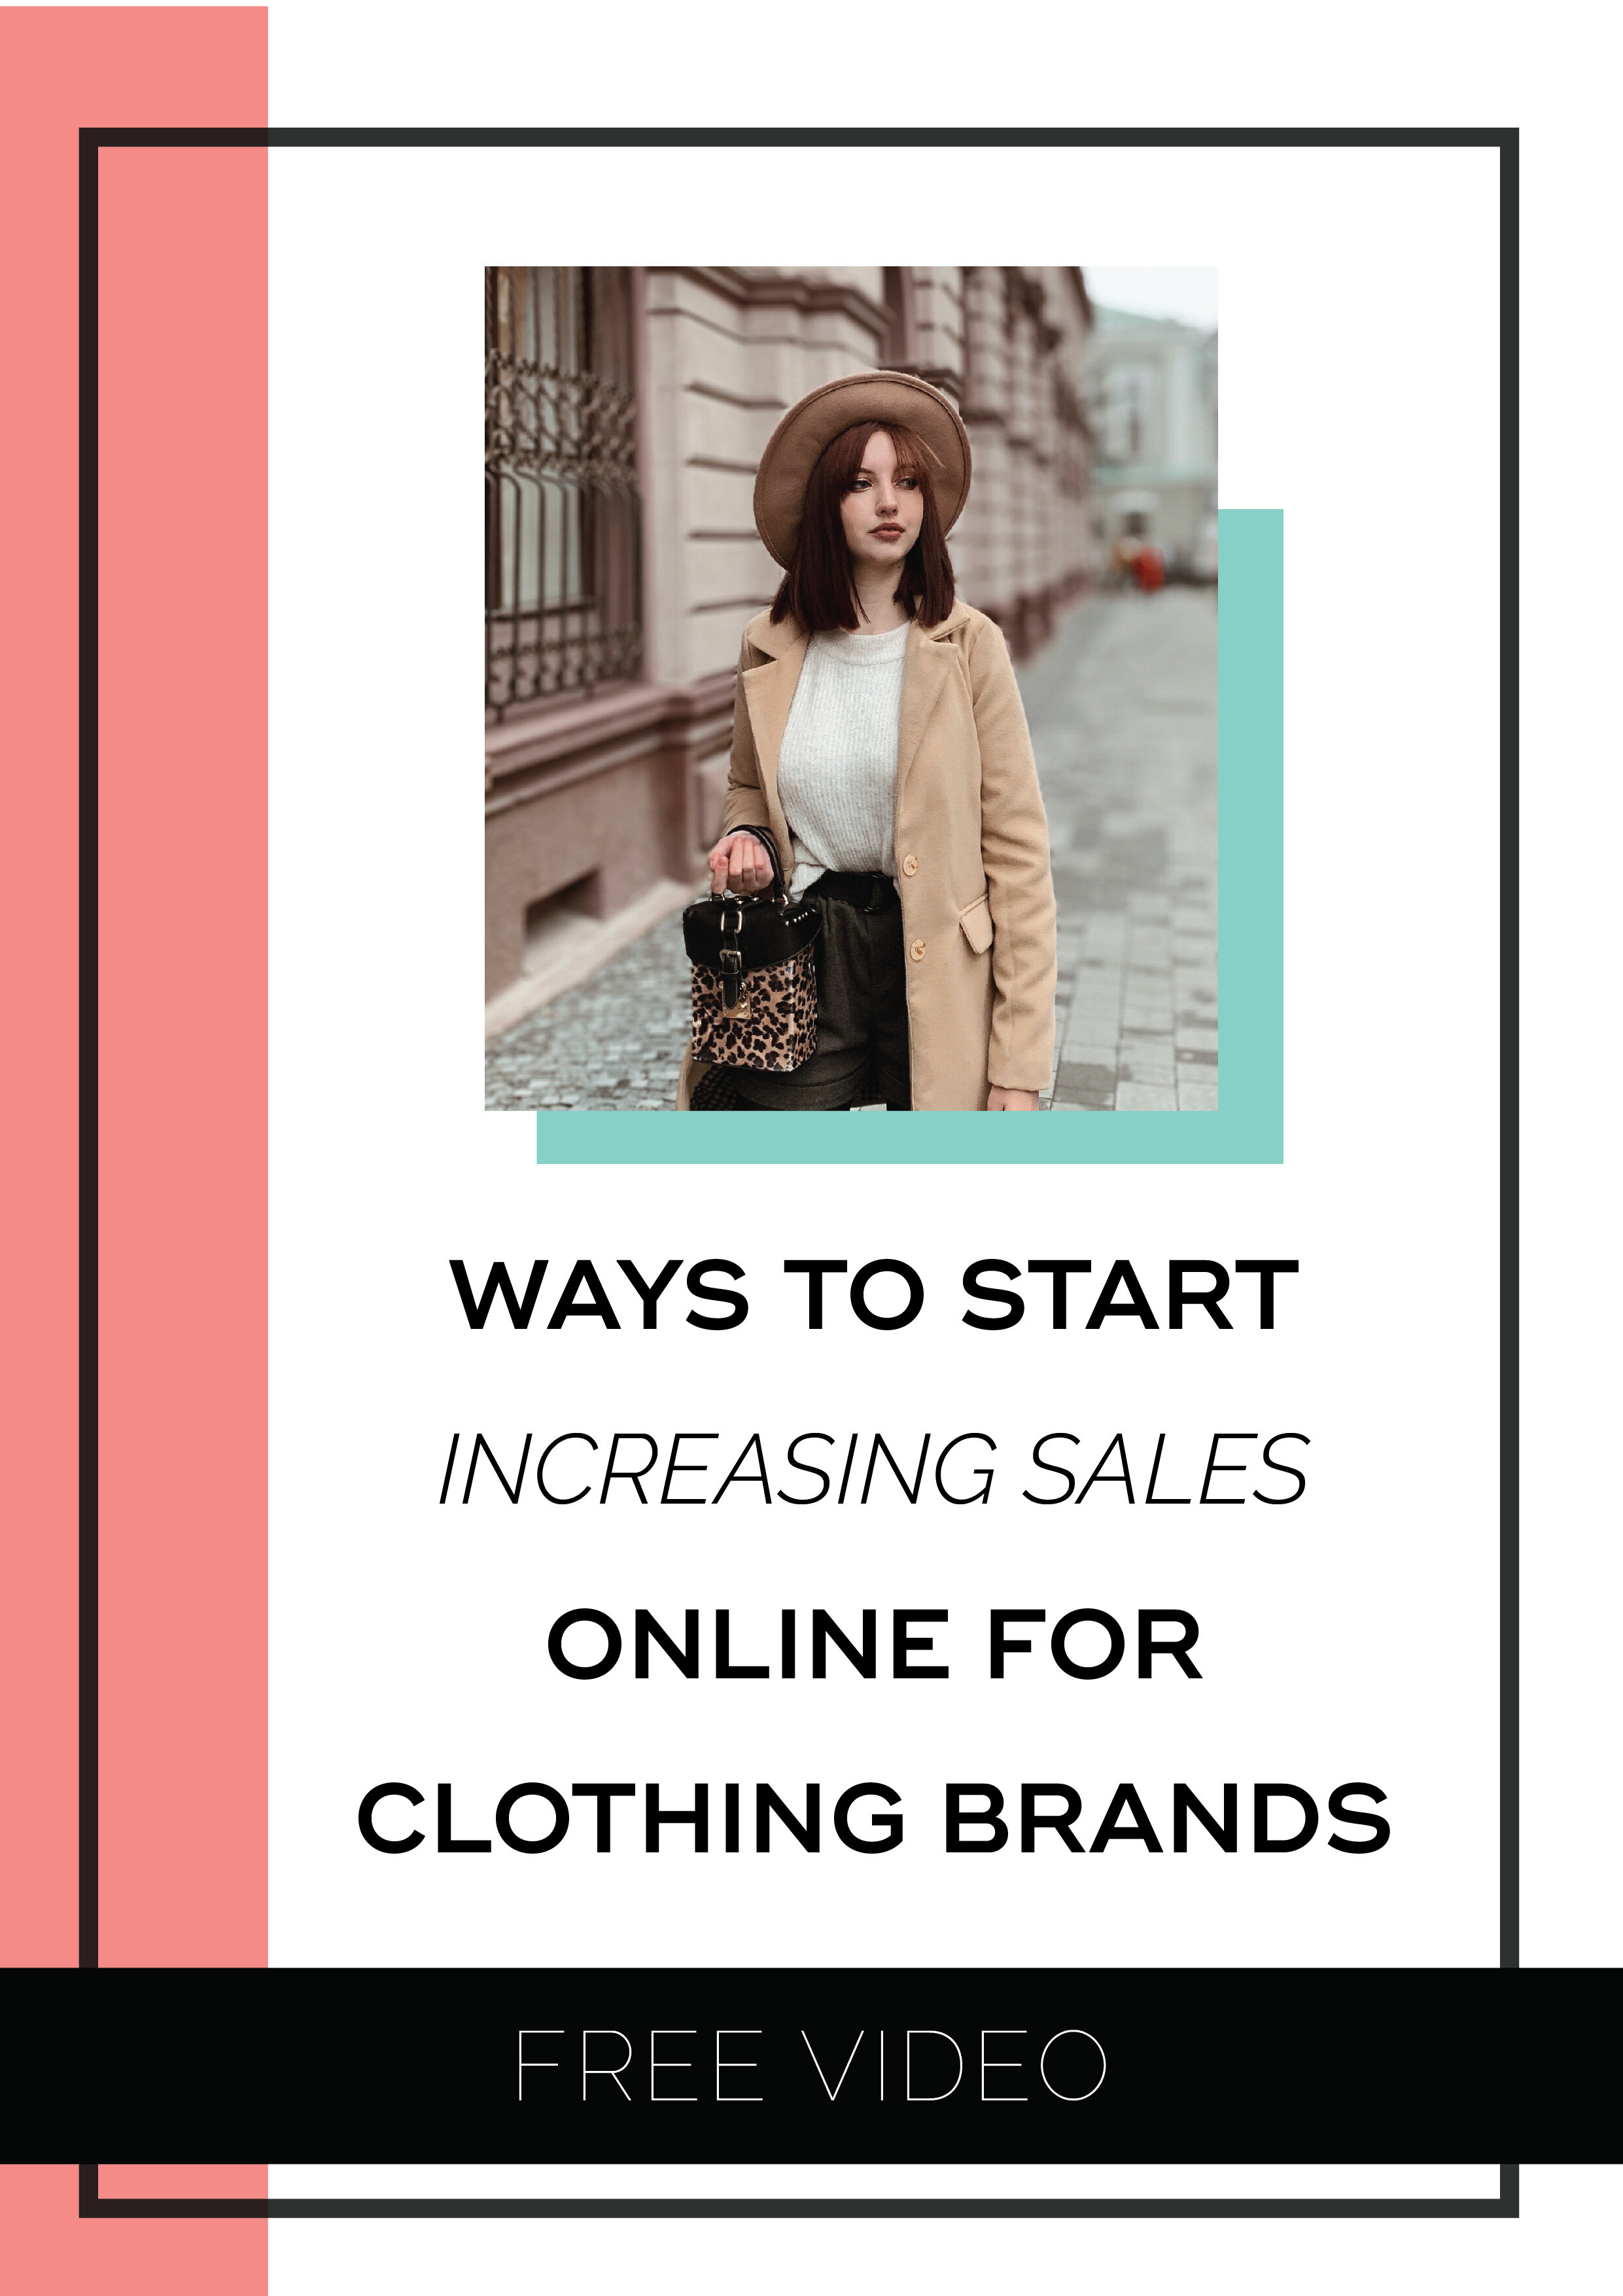 Ways to Start Increasing Sales Online For Clothing Brands2.jpg